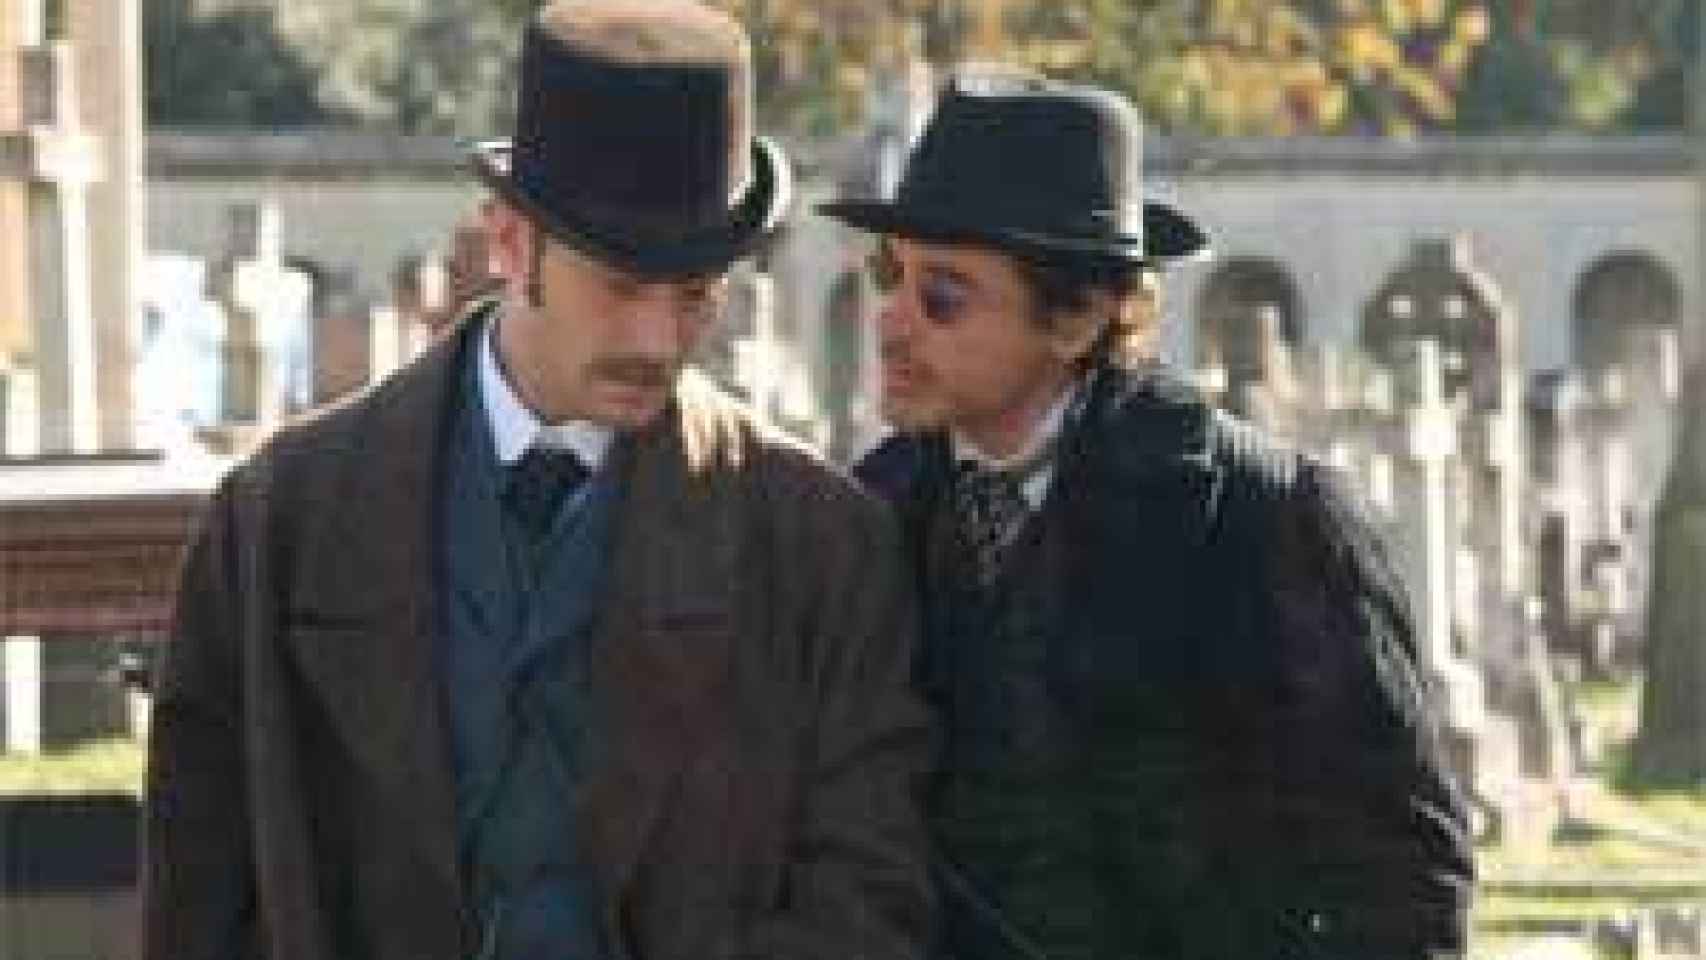 Image: Sherlock Holmes, cínico y brutal